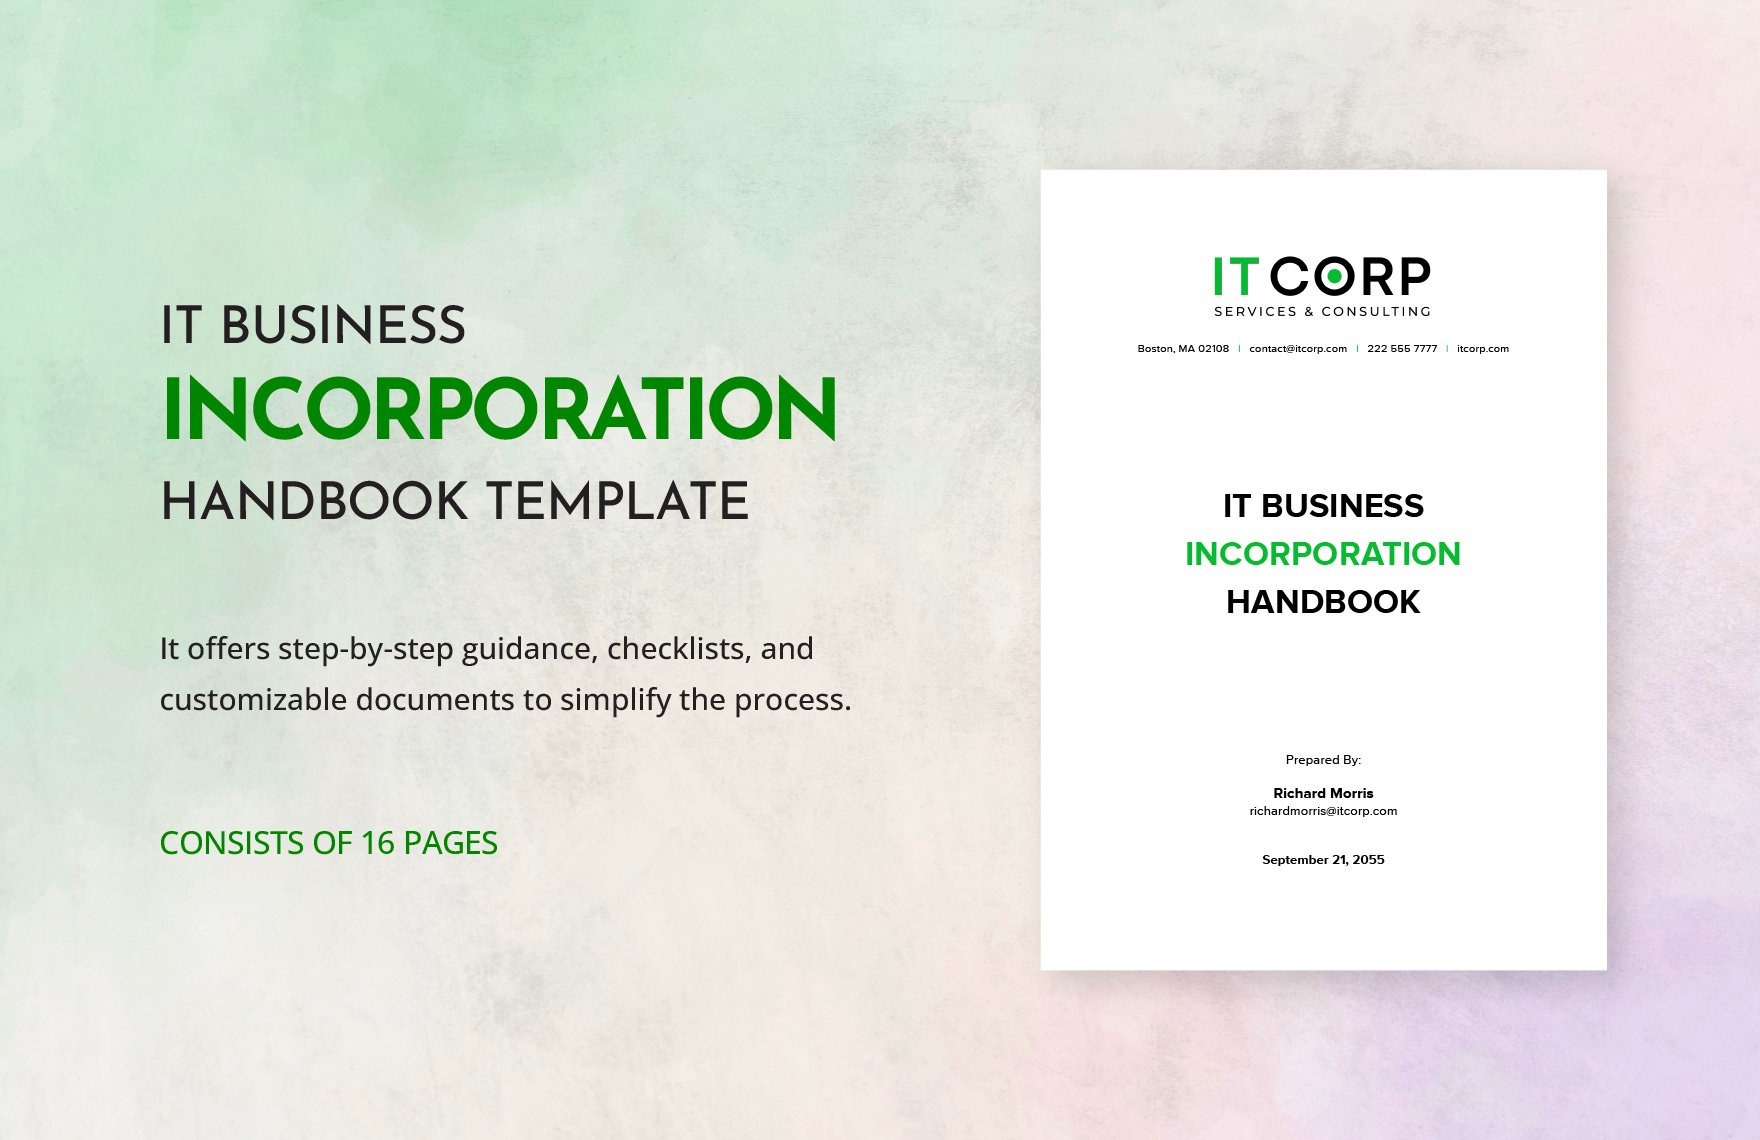 IT Business Incorporation Handbook Template in Word, Google Docs, PDF